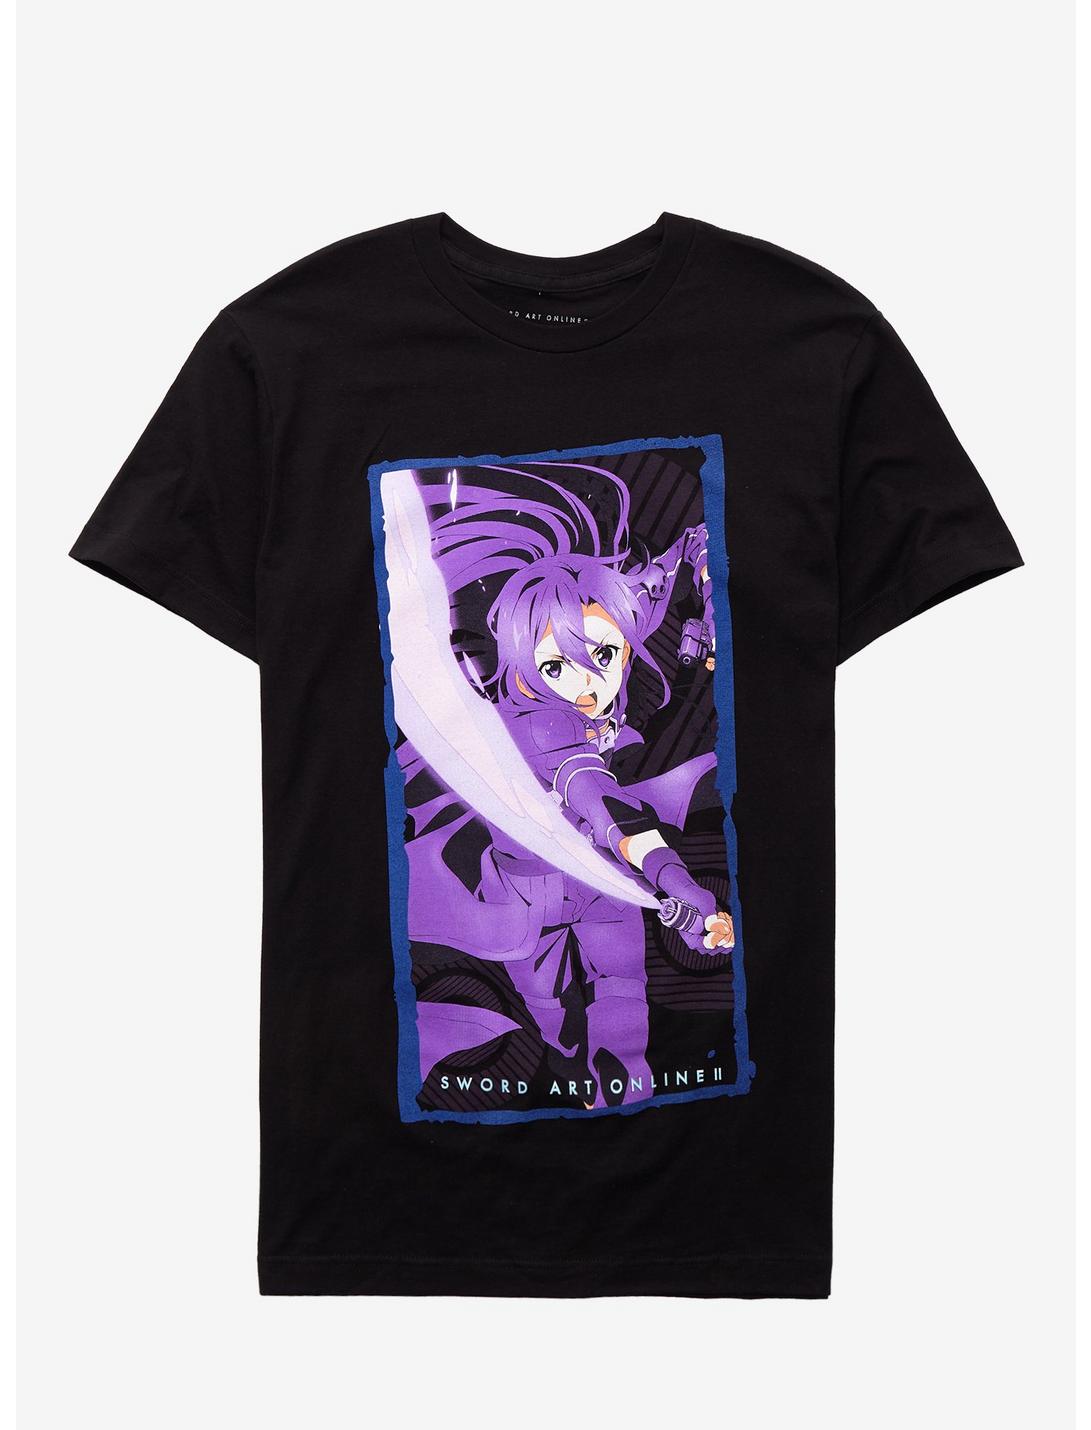 Sword Art Online II Purple T-Shirt, BLACK, hi-res